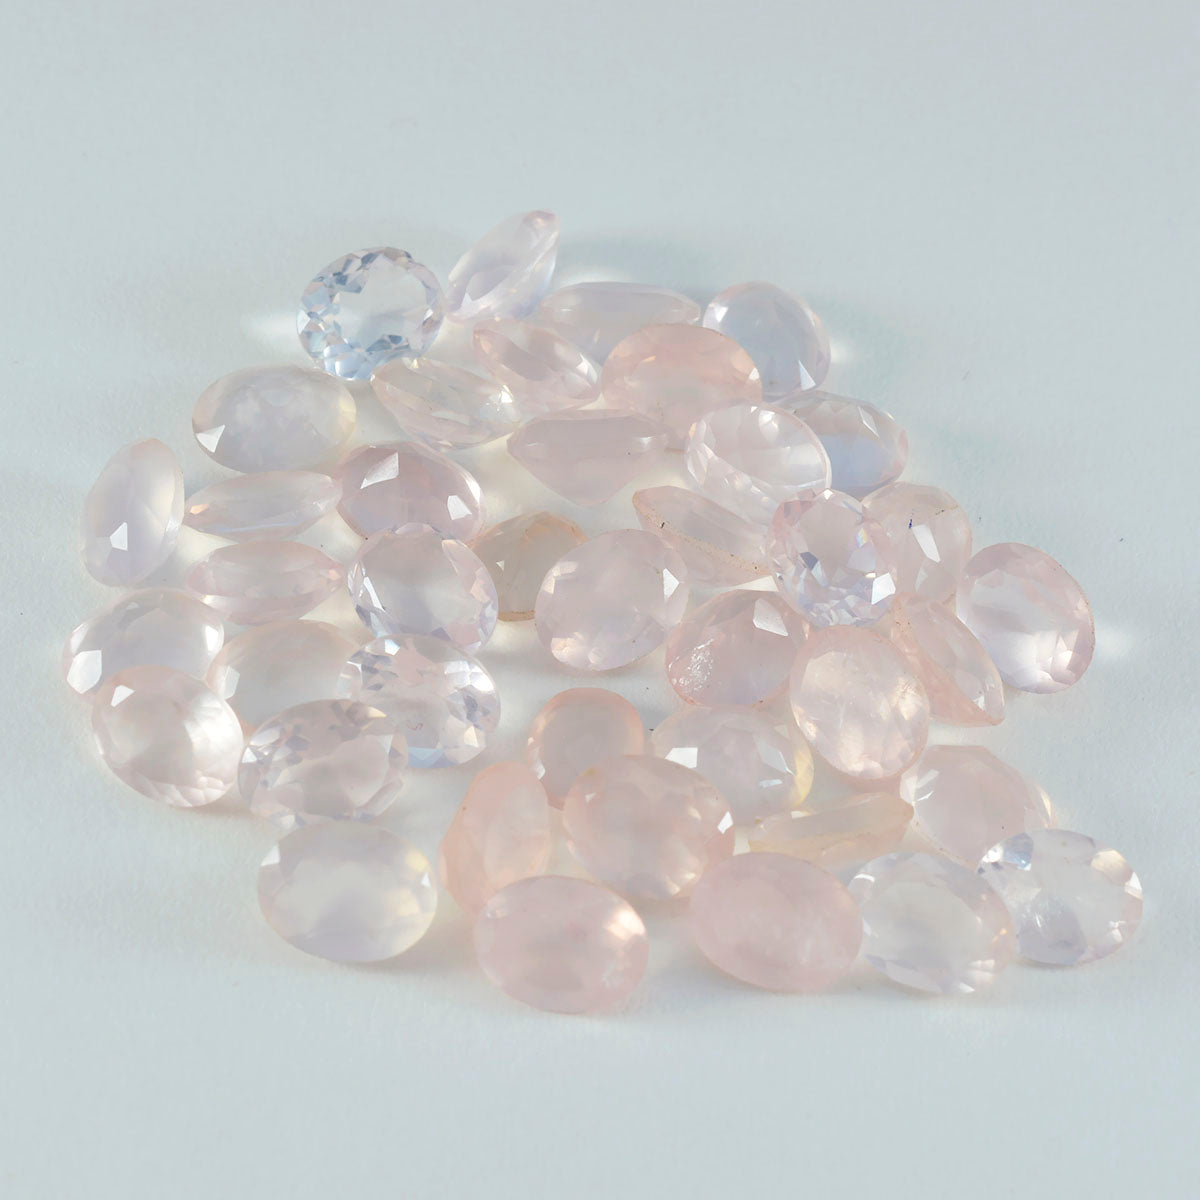 Riyogems 1PC roze rozenkwarts gefacetteerd 5x7 mm ovale vorm uitstekende kwaliteit edelsteen